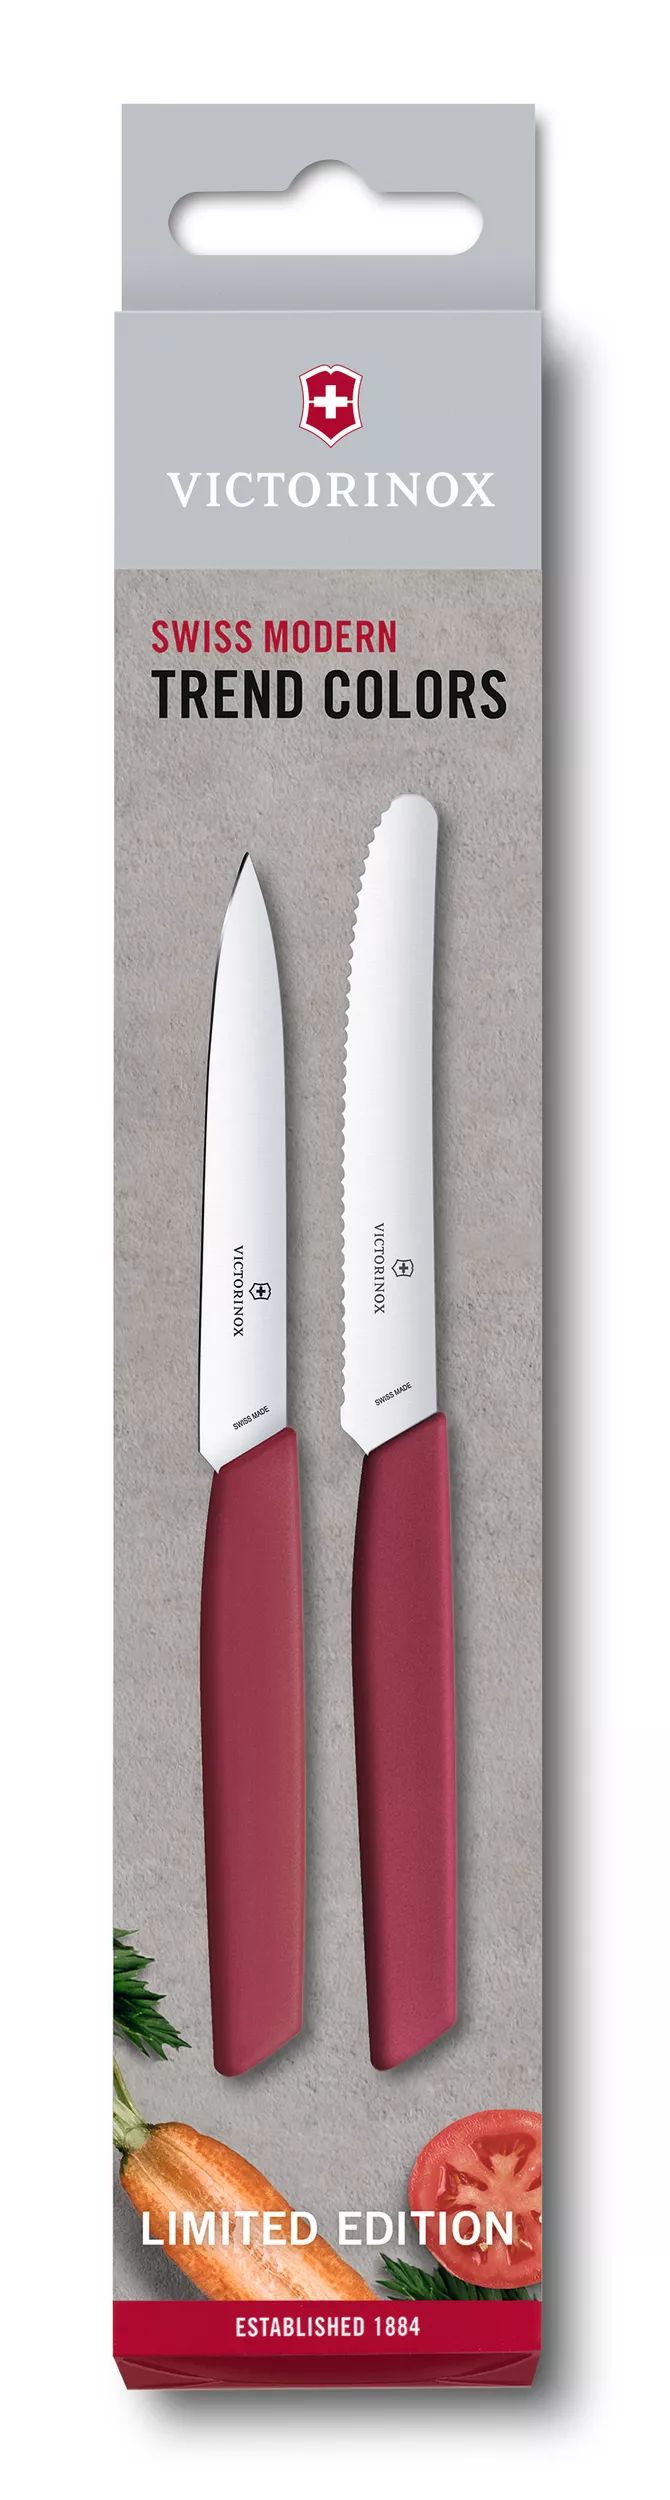 Swiss Modern Paring Knife Set, 2 pieces-6.9096.2L4